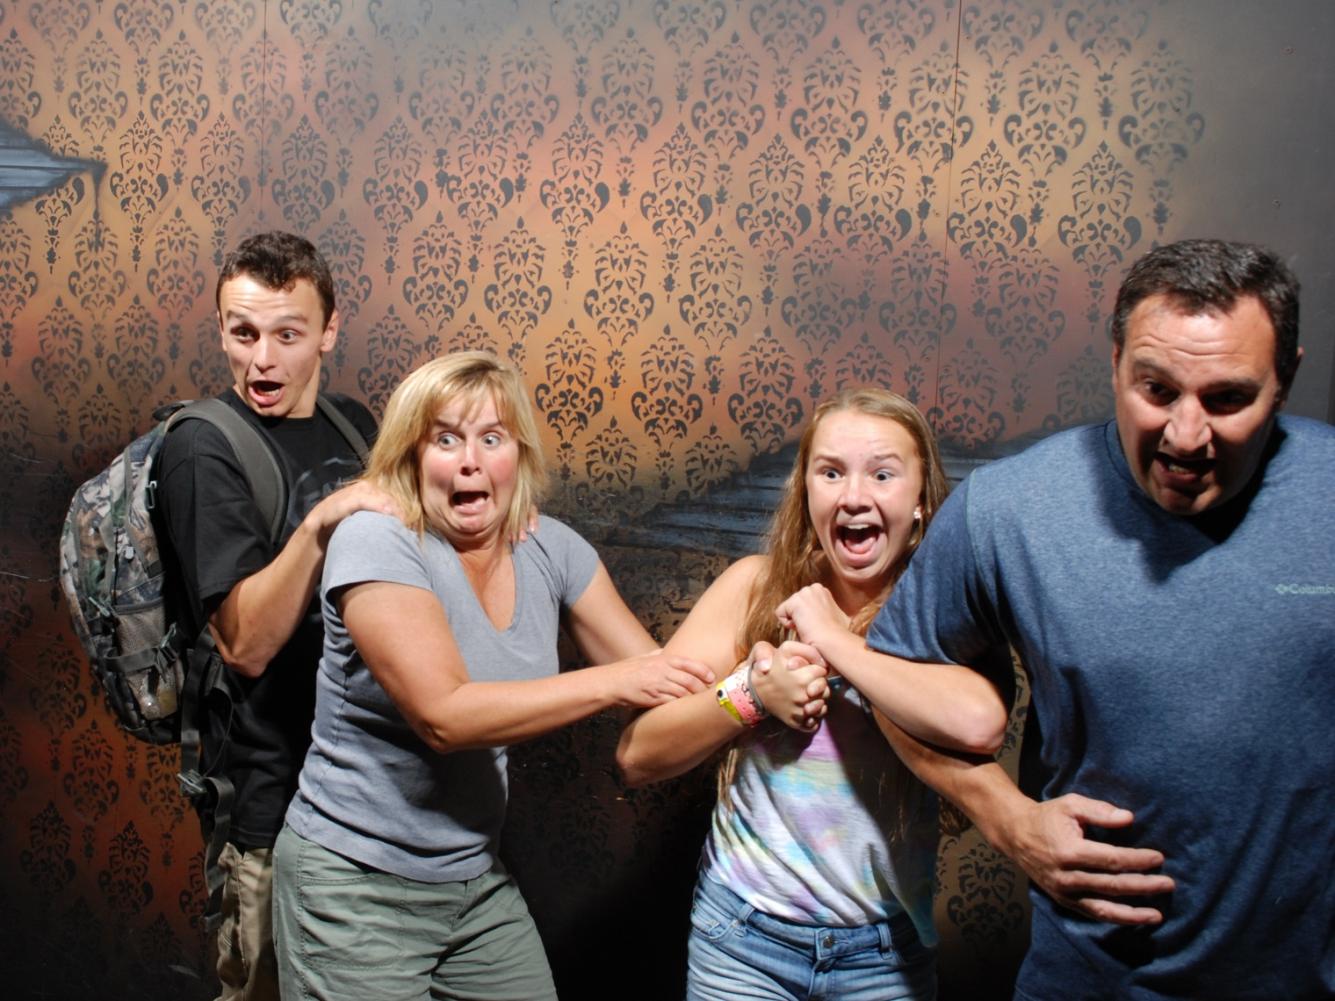 Niagara Falls Haunted House Fear Pics